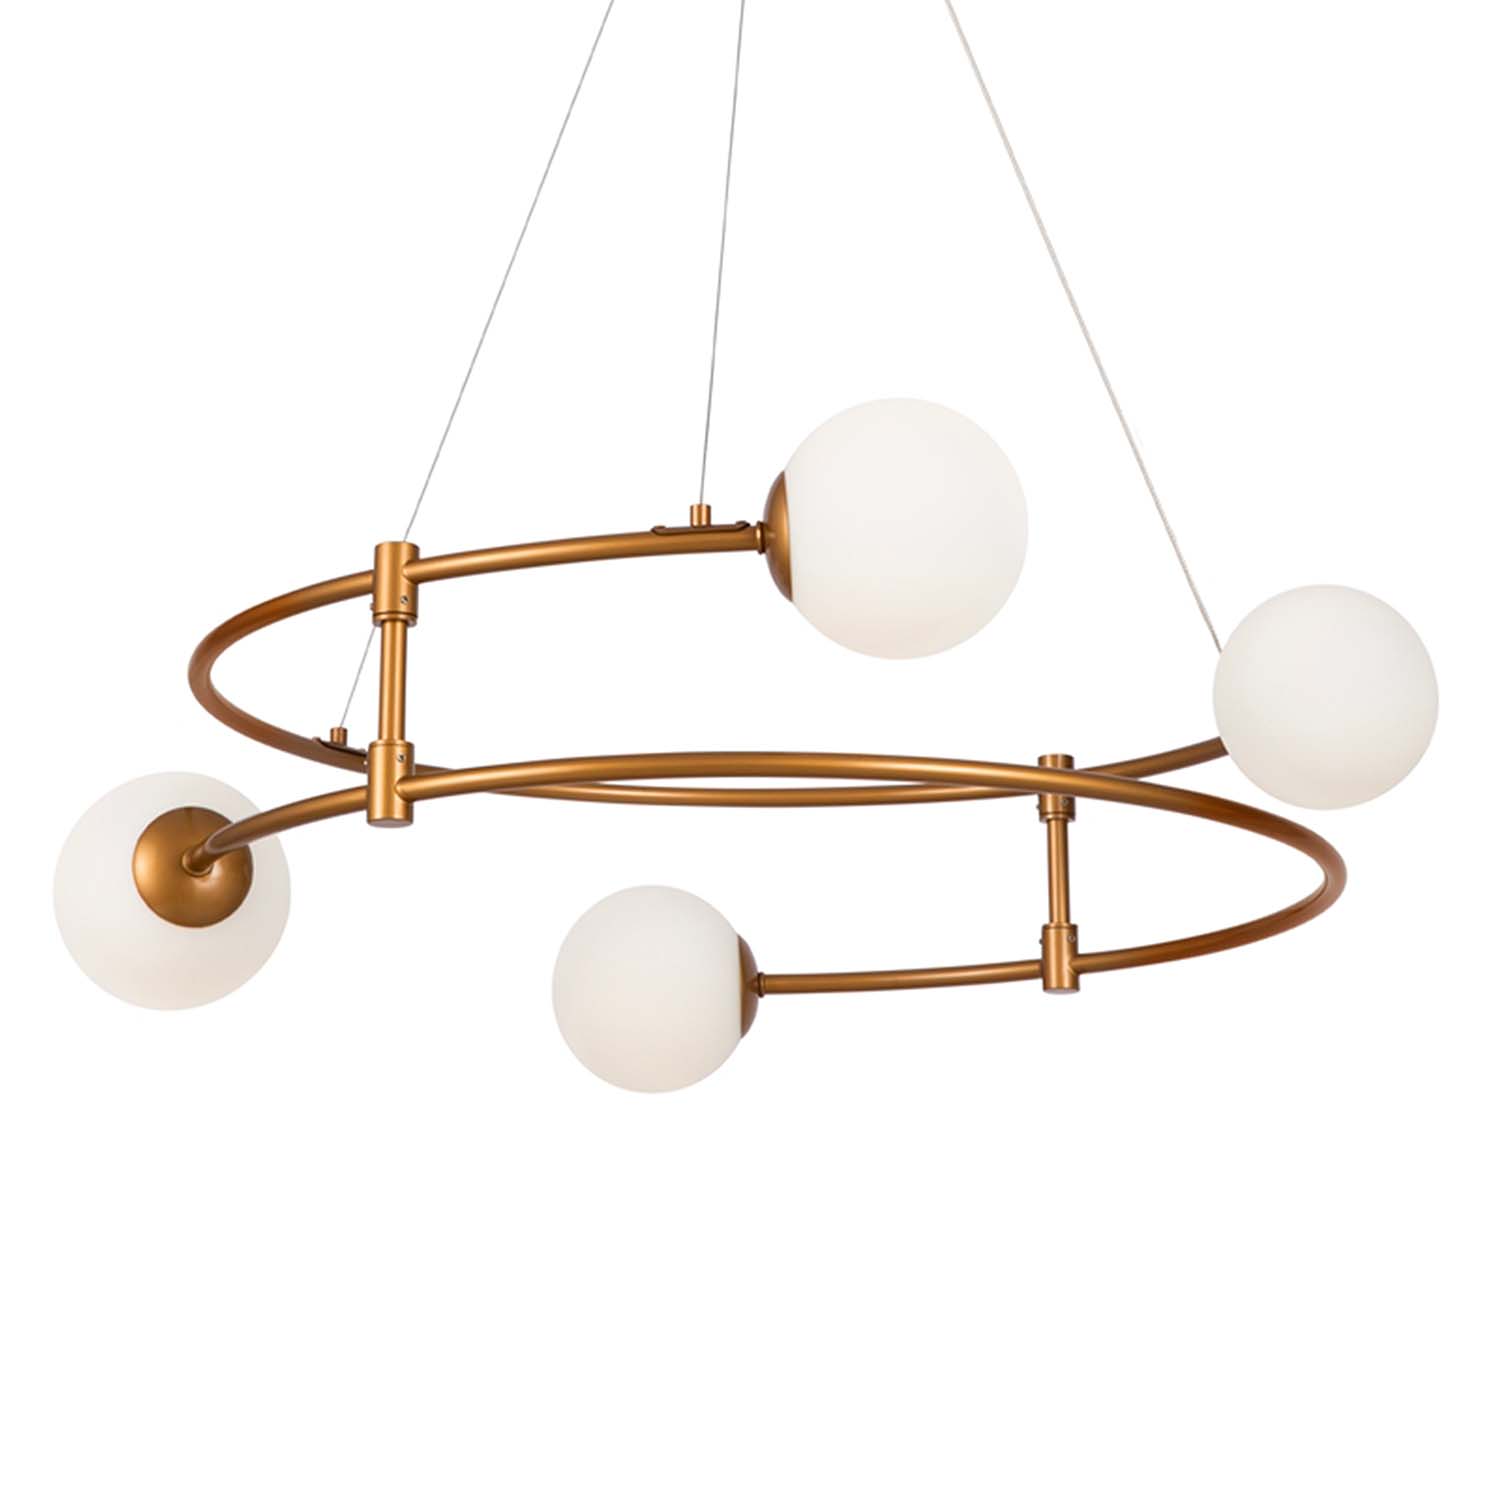 BALANCE - Circular chandelier with contemporary glass balls